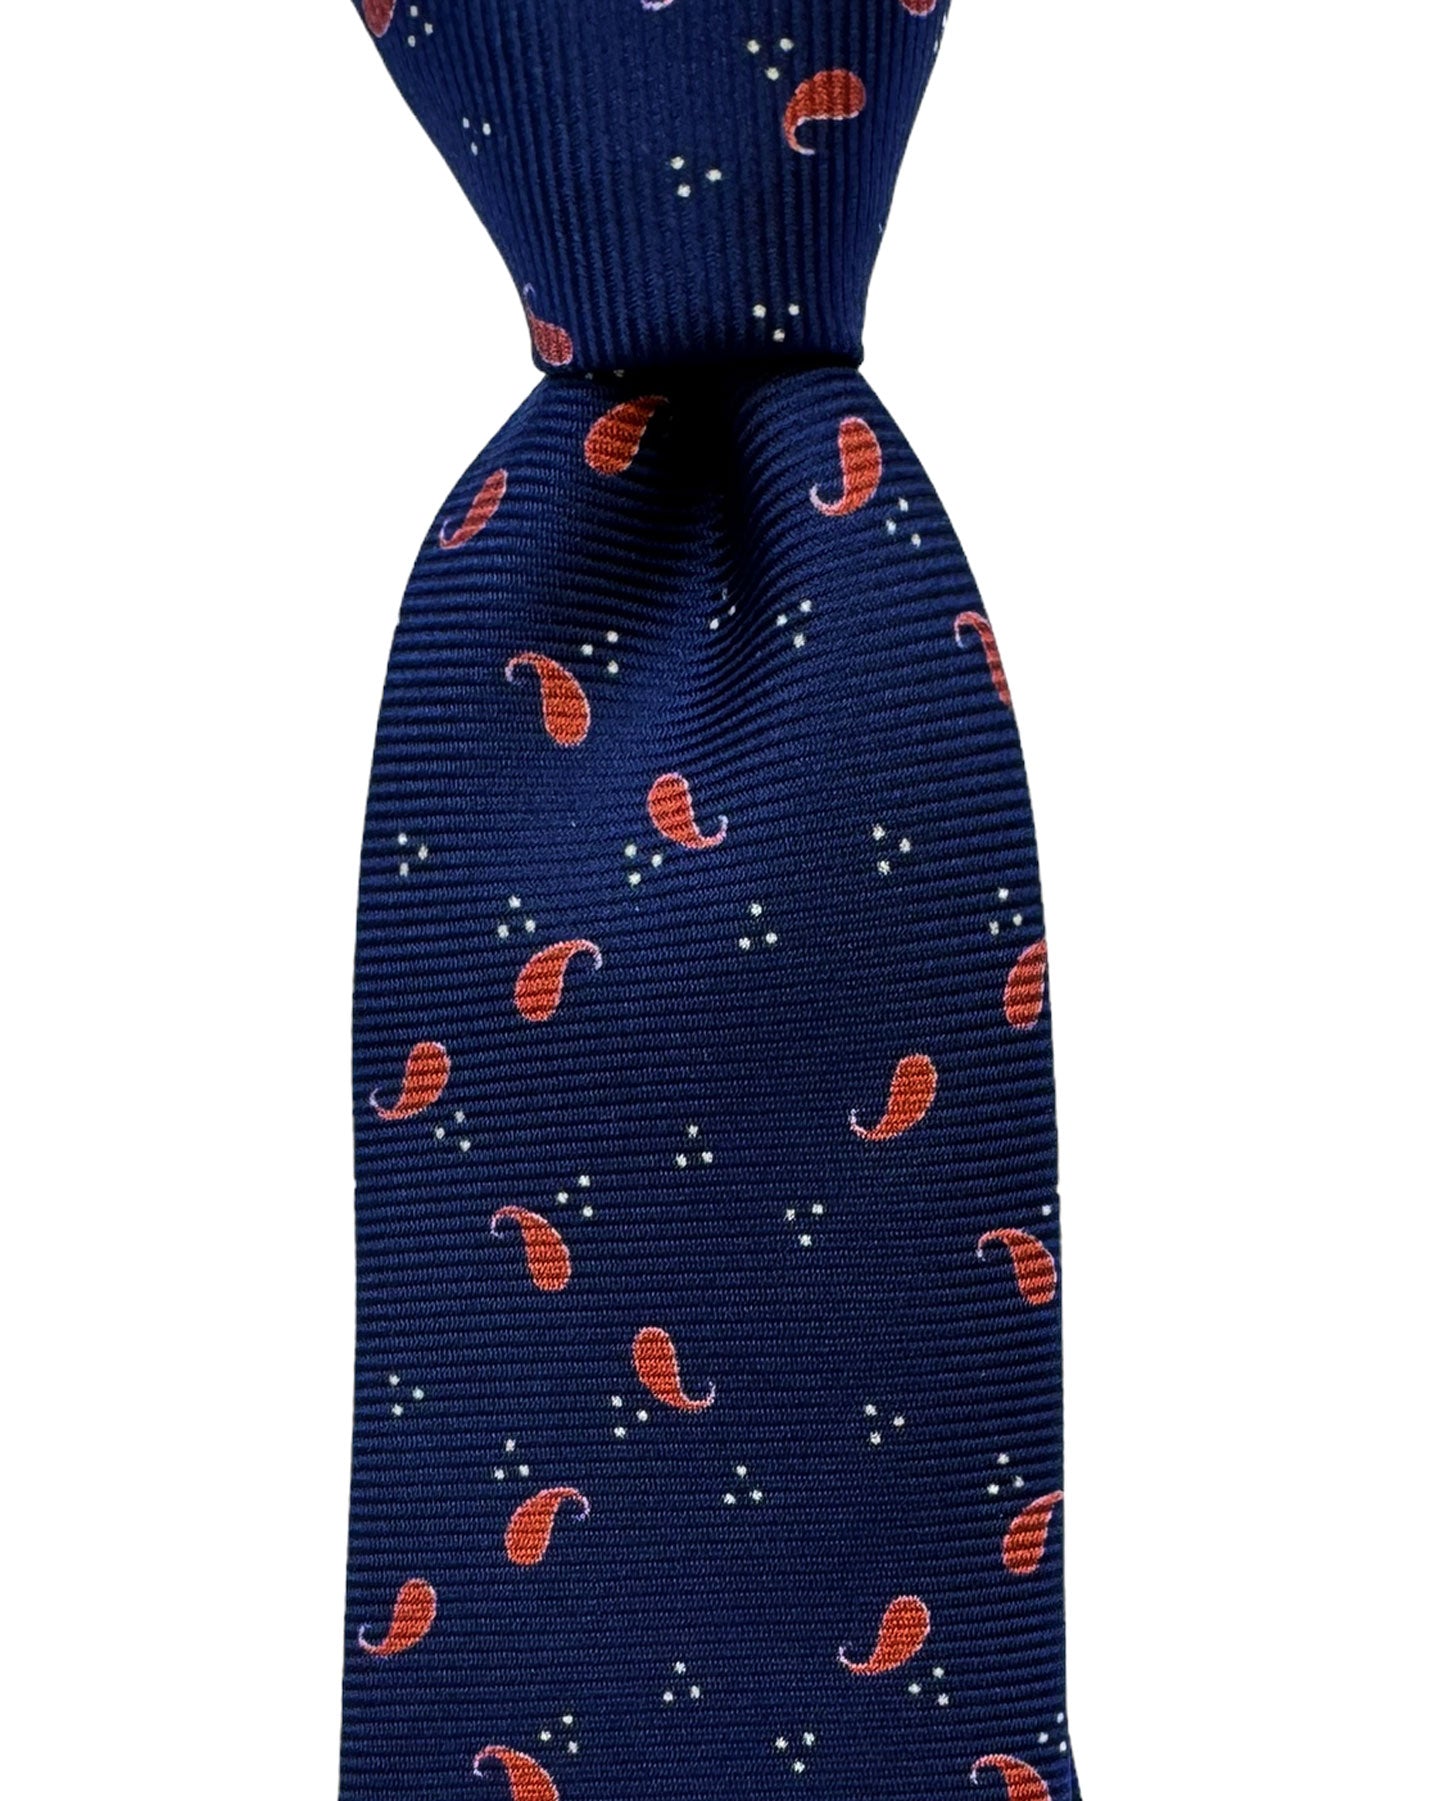 Kiton Tie Dark Blue Orange Paisley - Sevenfold Necktie